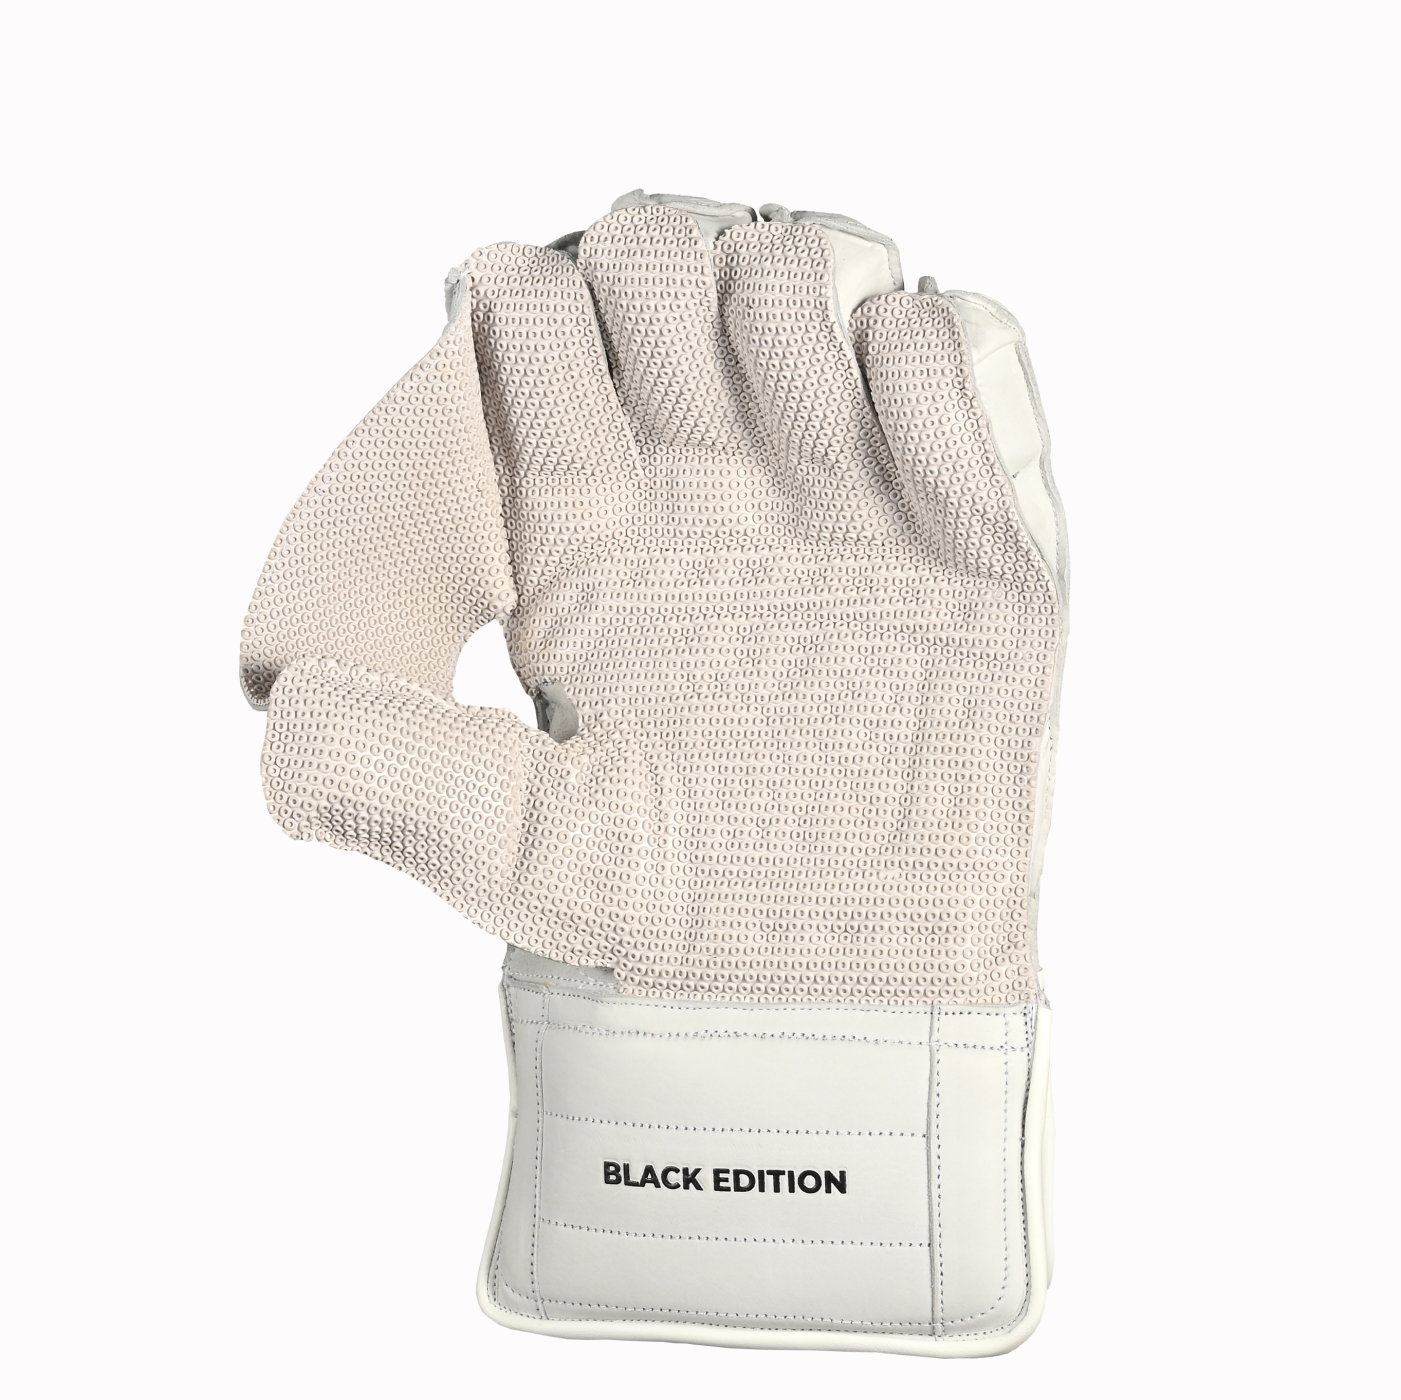 Hammer Black Edition Wicket Keeping Gloves